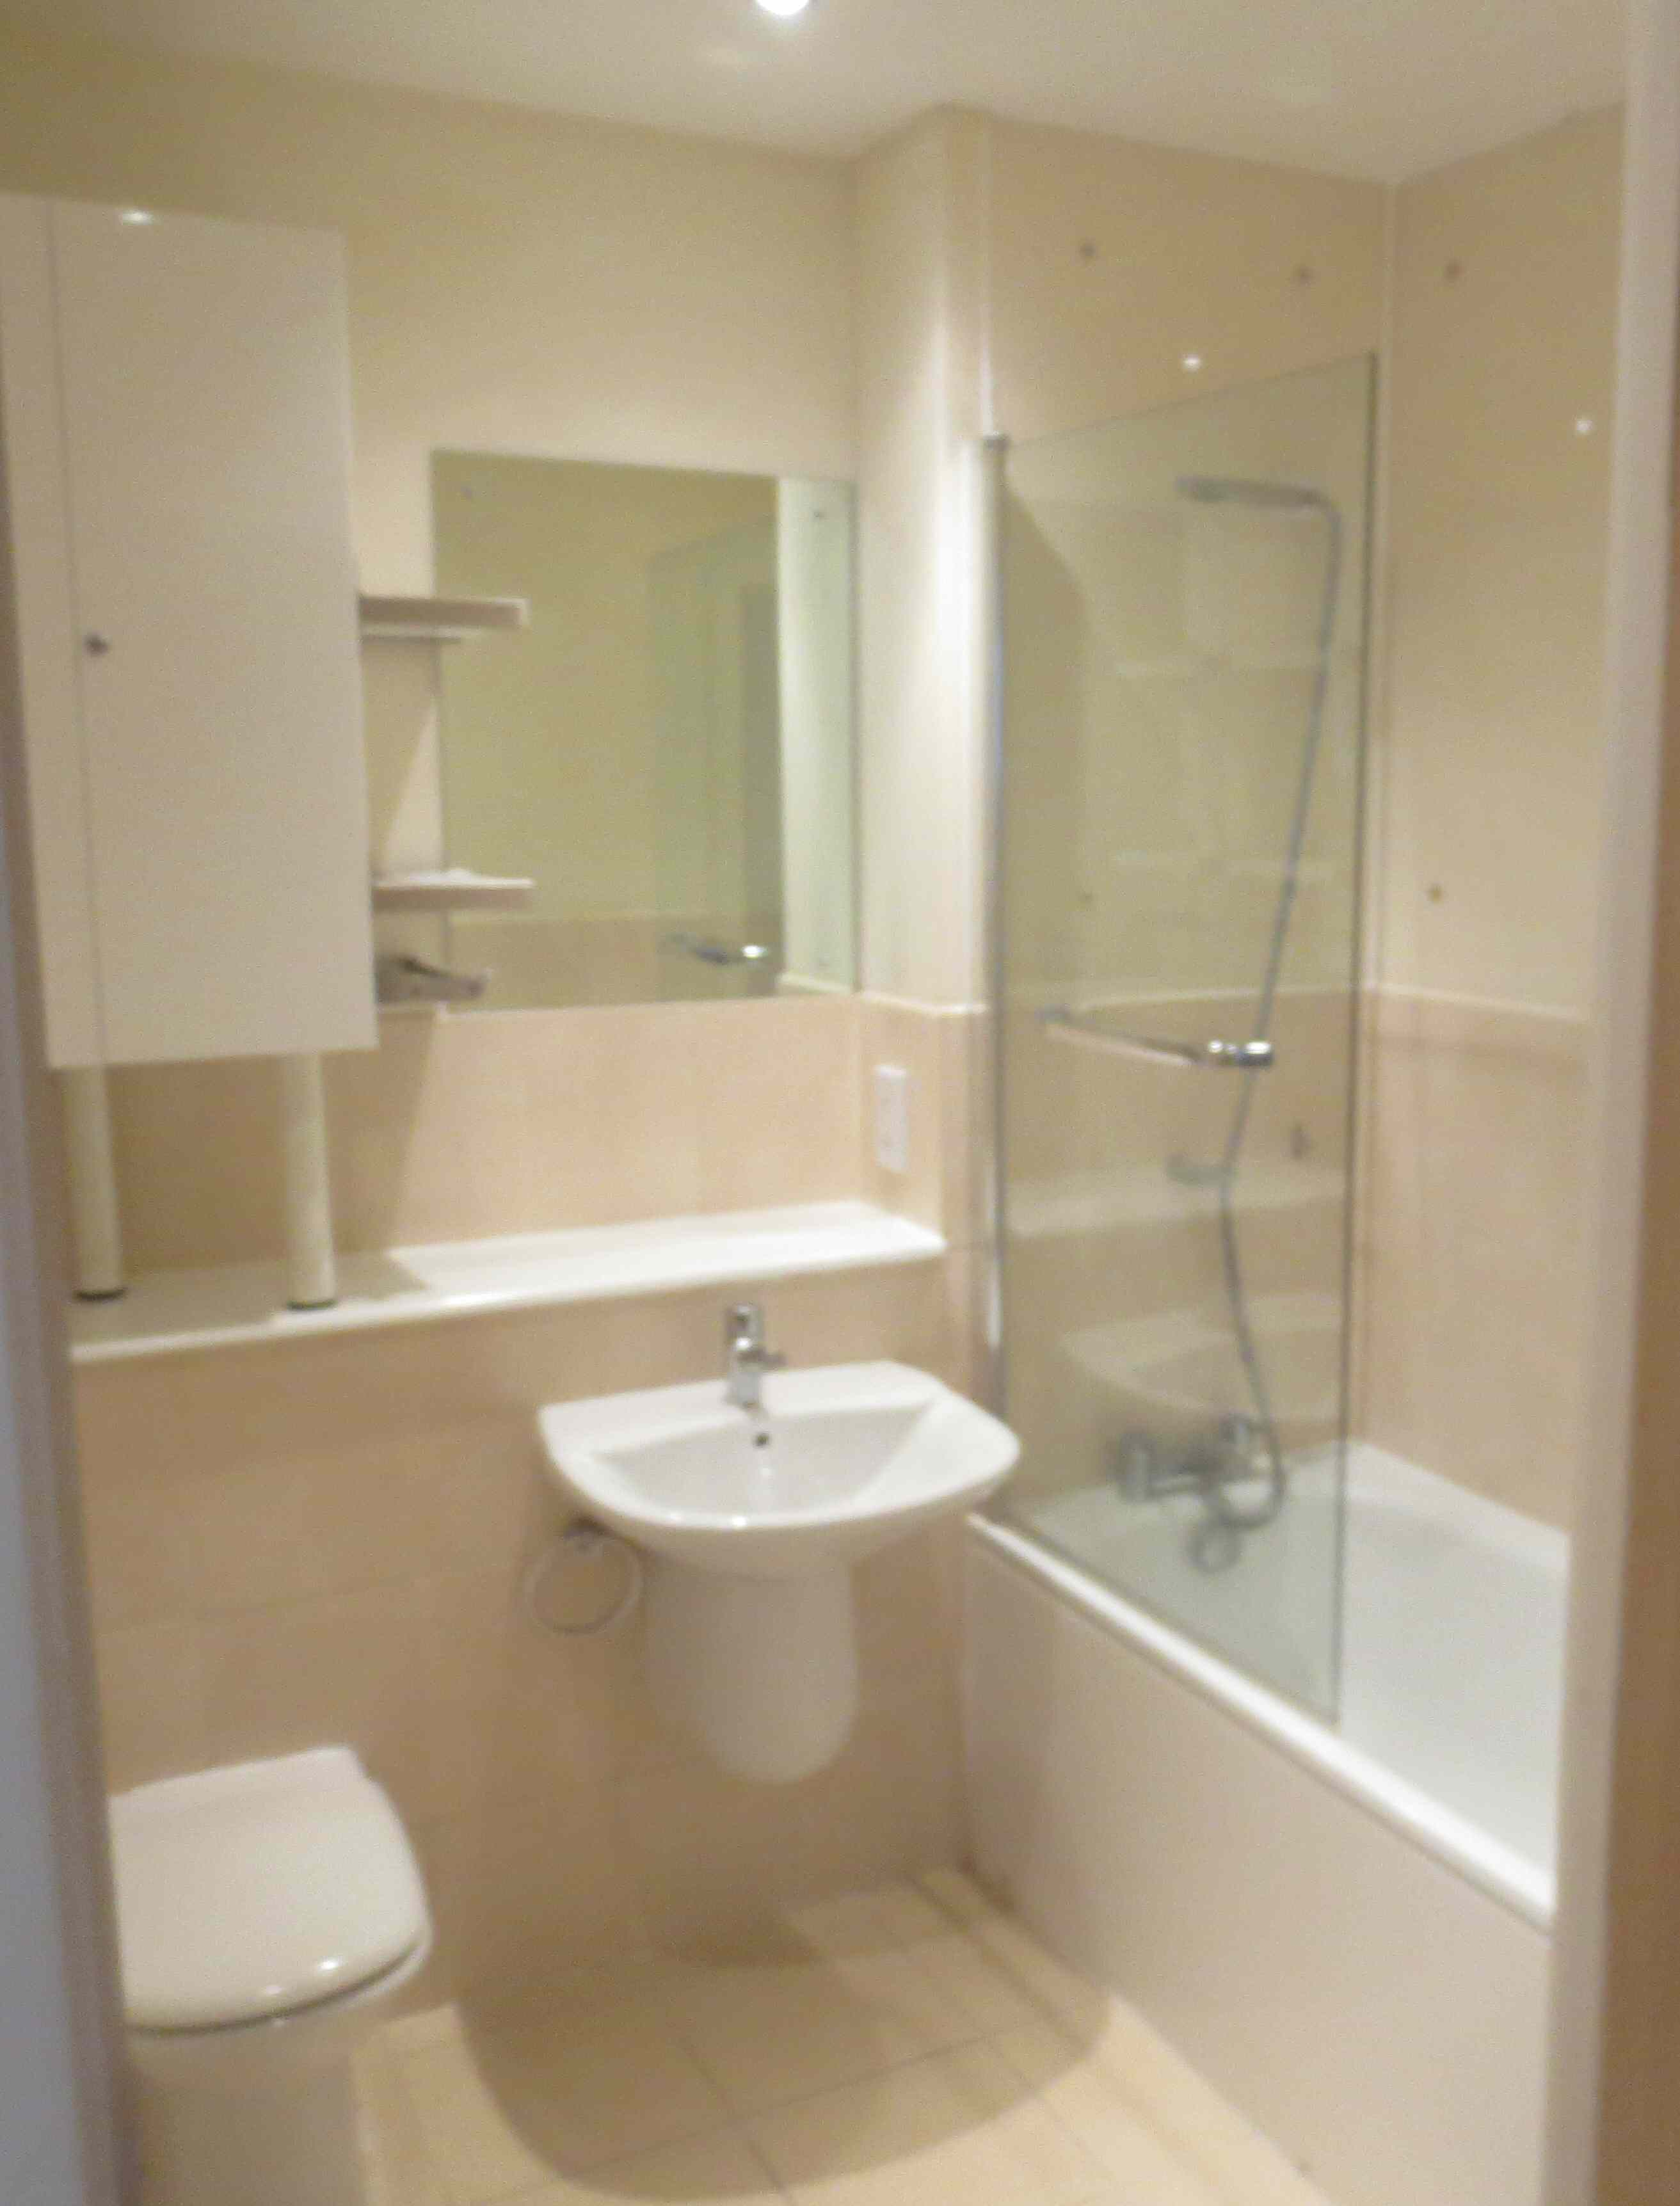 2 Bedroom Flat to rent in Nottingham - Mashroom